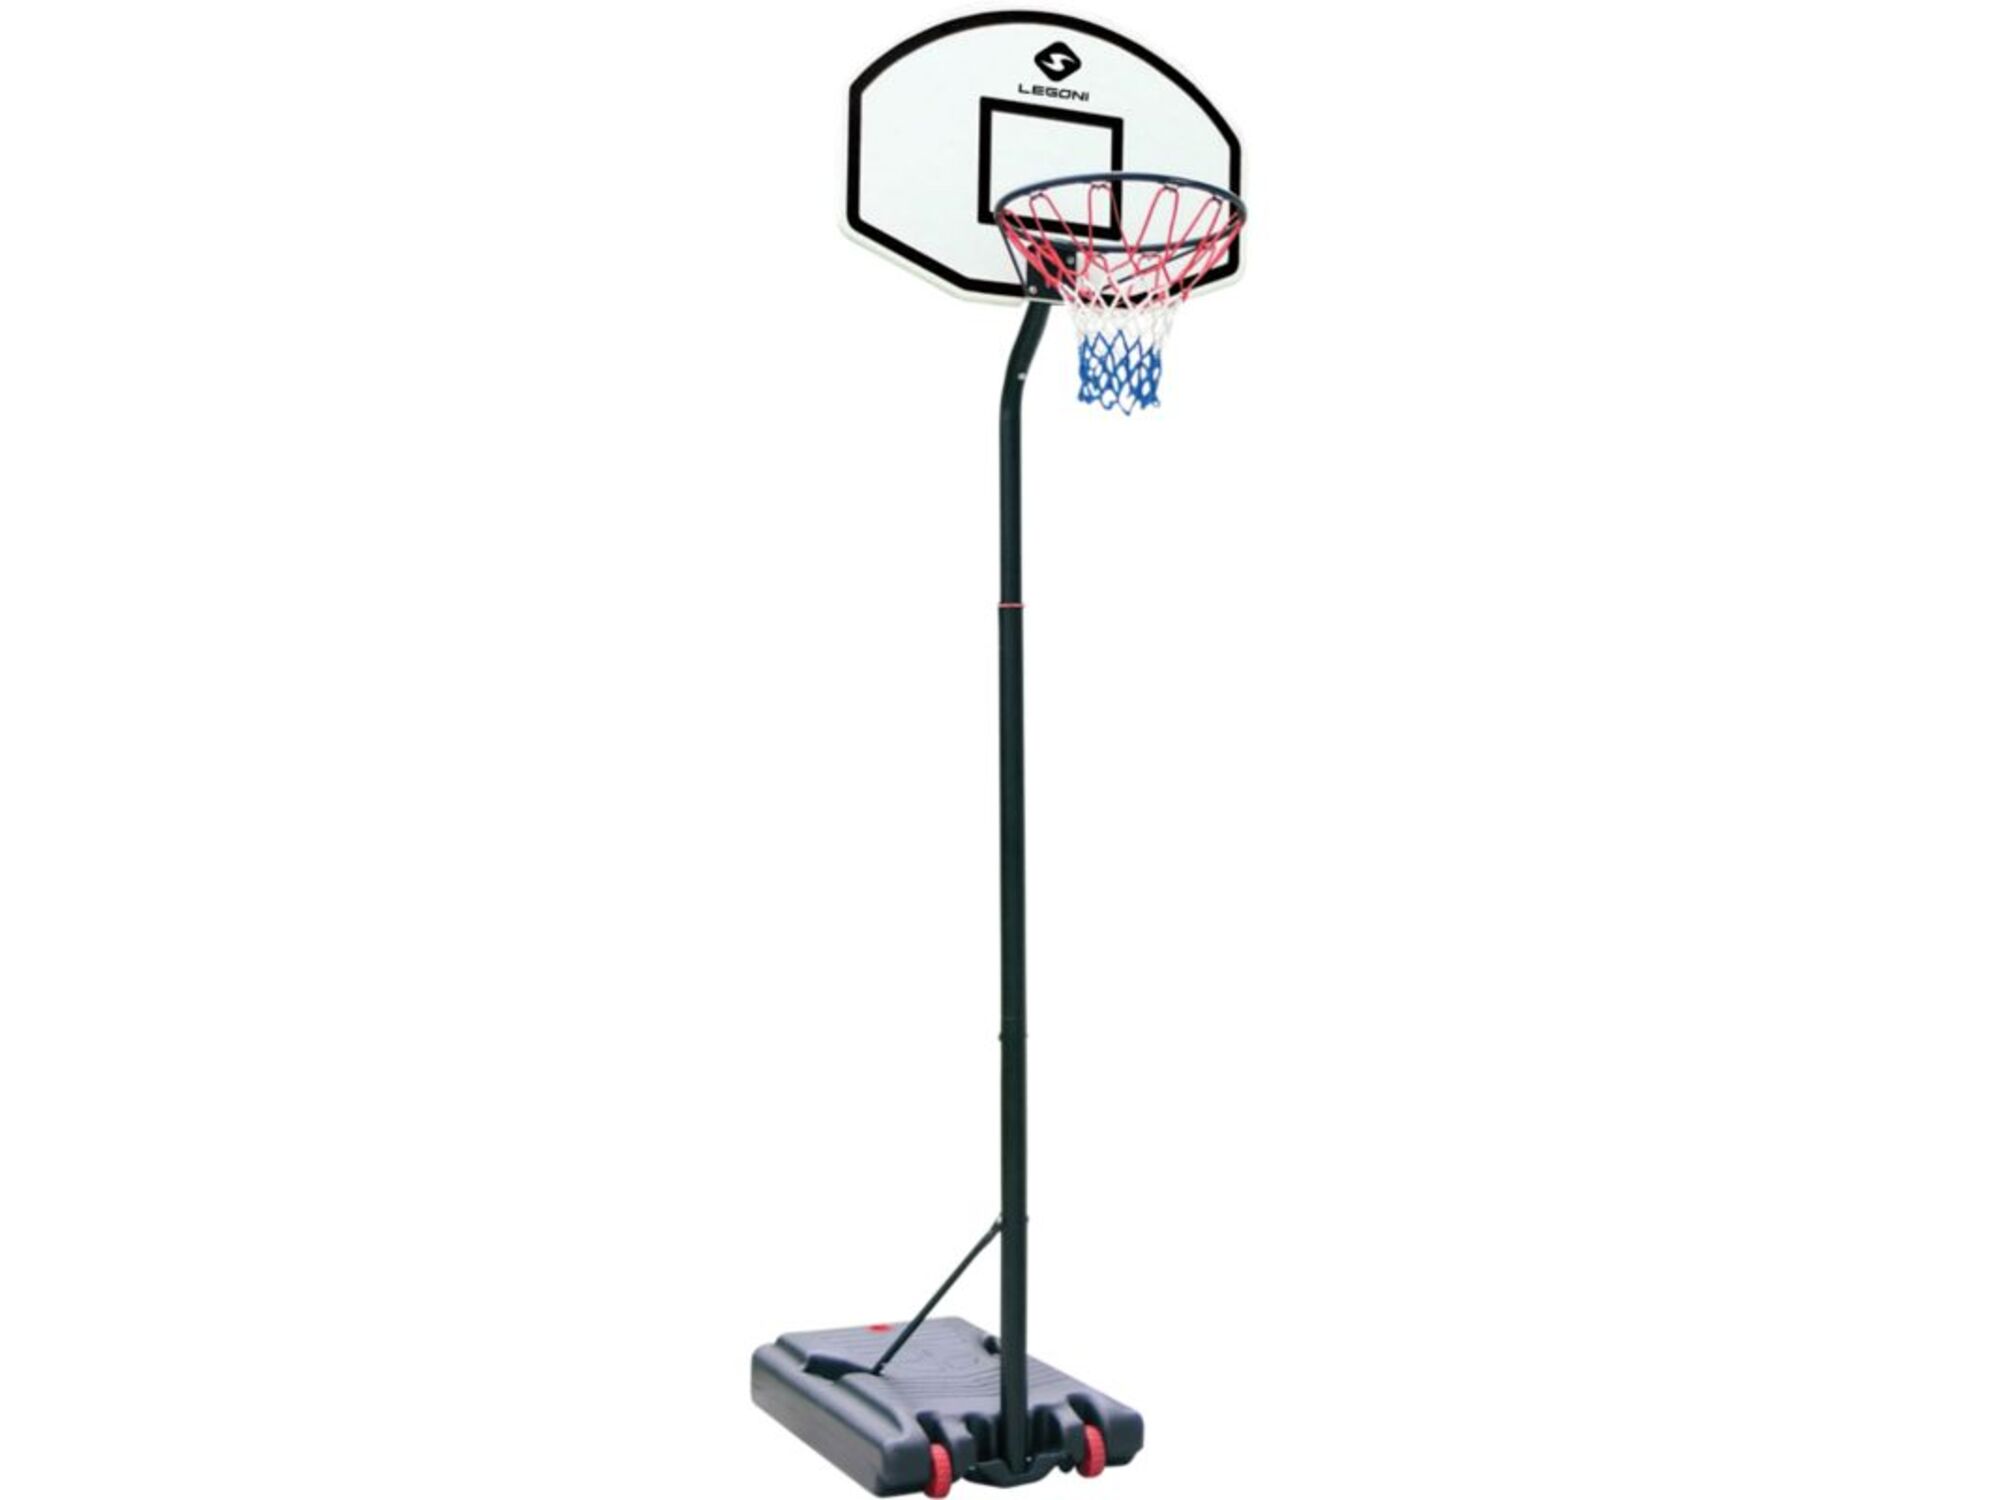 LEGONI prostostoječi košarkarski koš Home star 260, 205-260 cm, LEK23-260